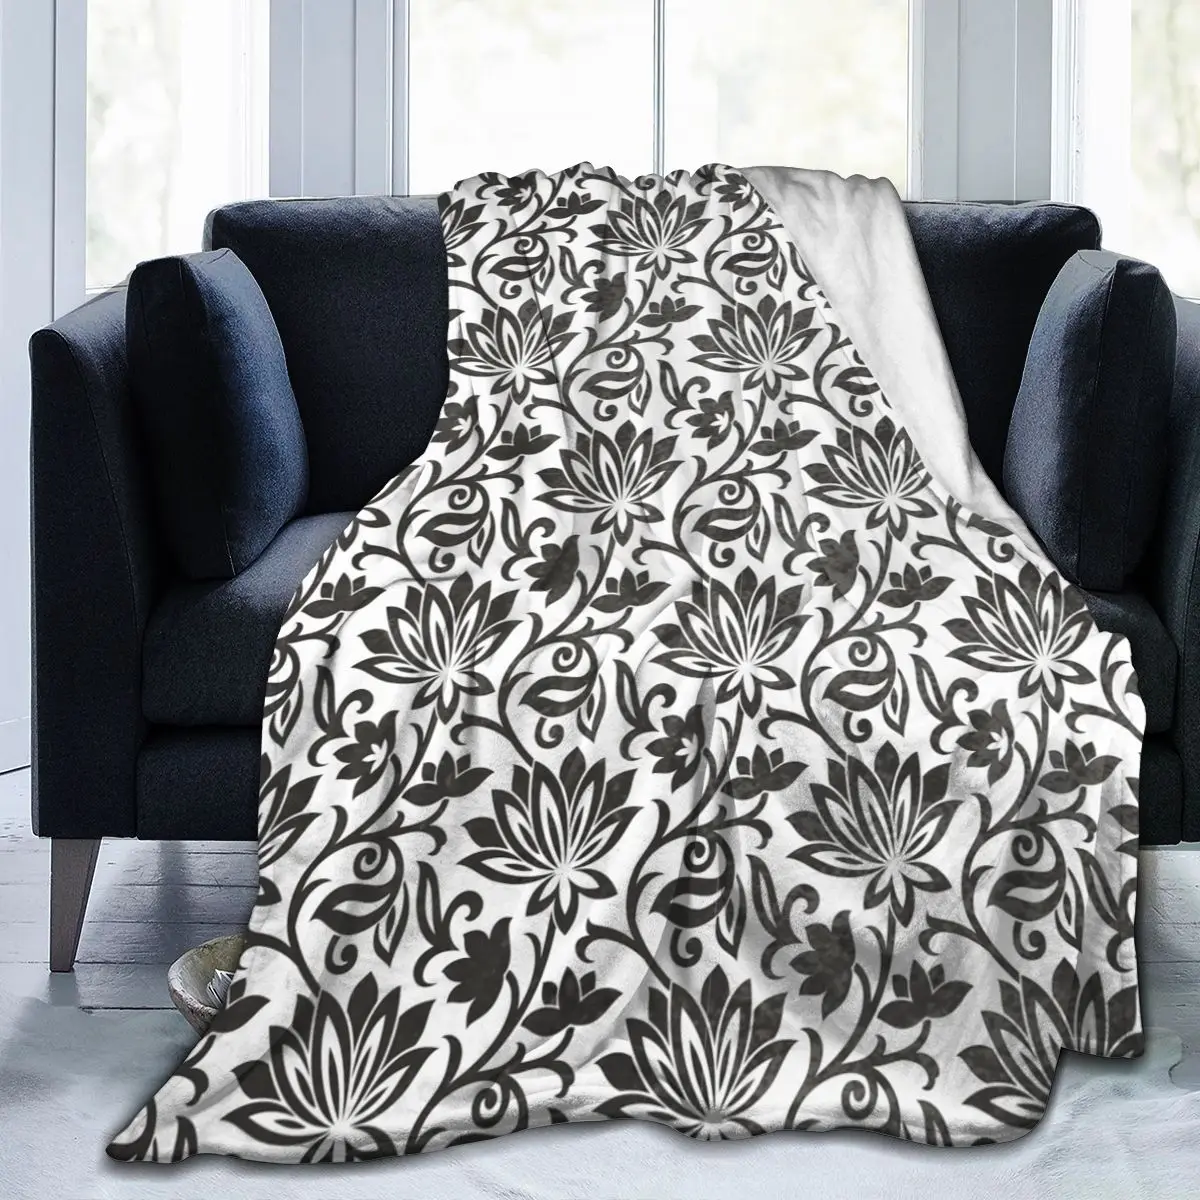 

Lotus nap blanket bed sheet blanket bed sofa air conditioning Pajama bed sheet throwing bed sheet children's gift